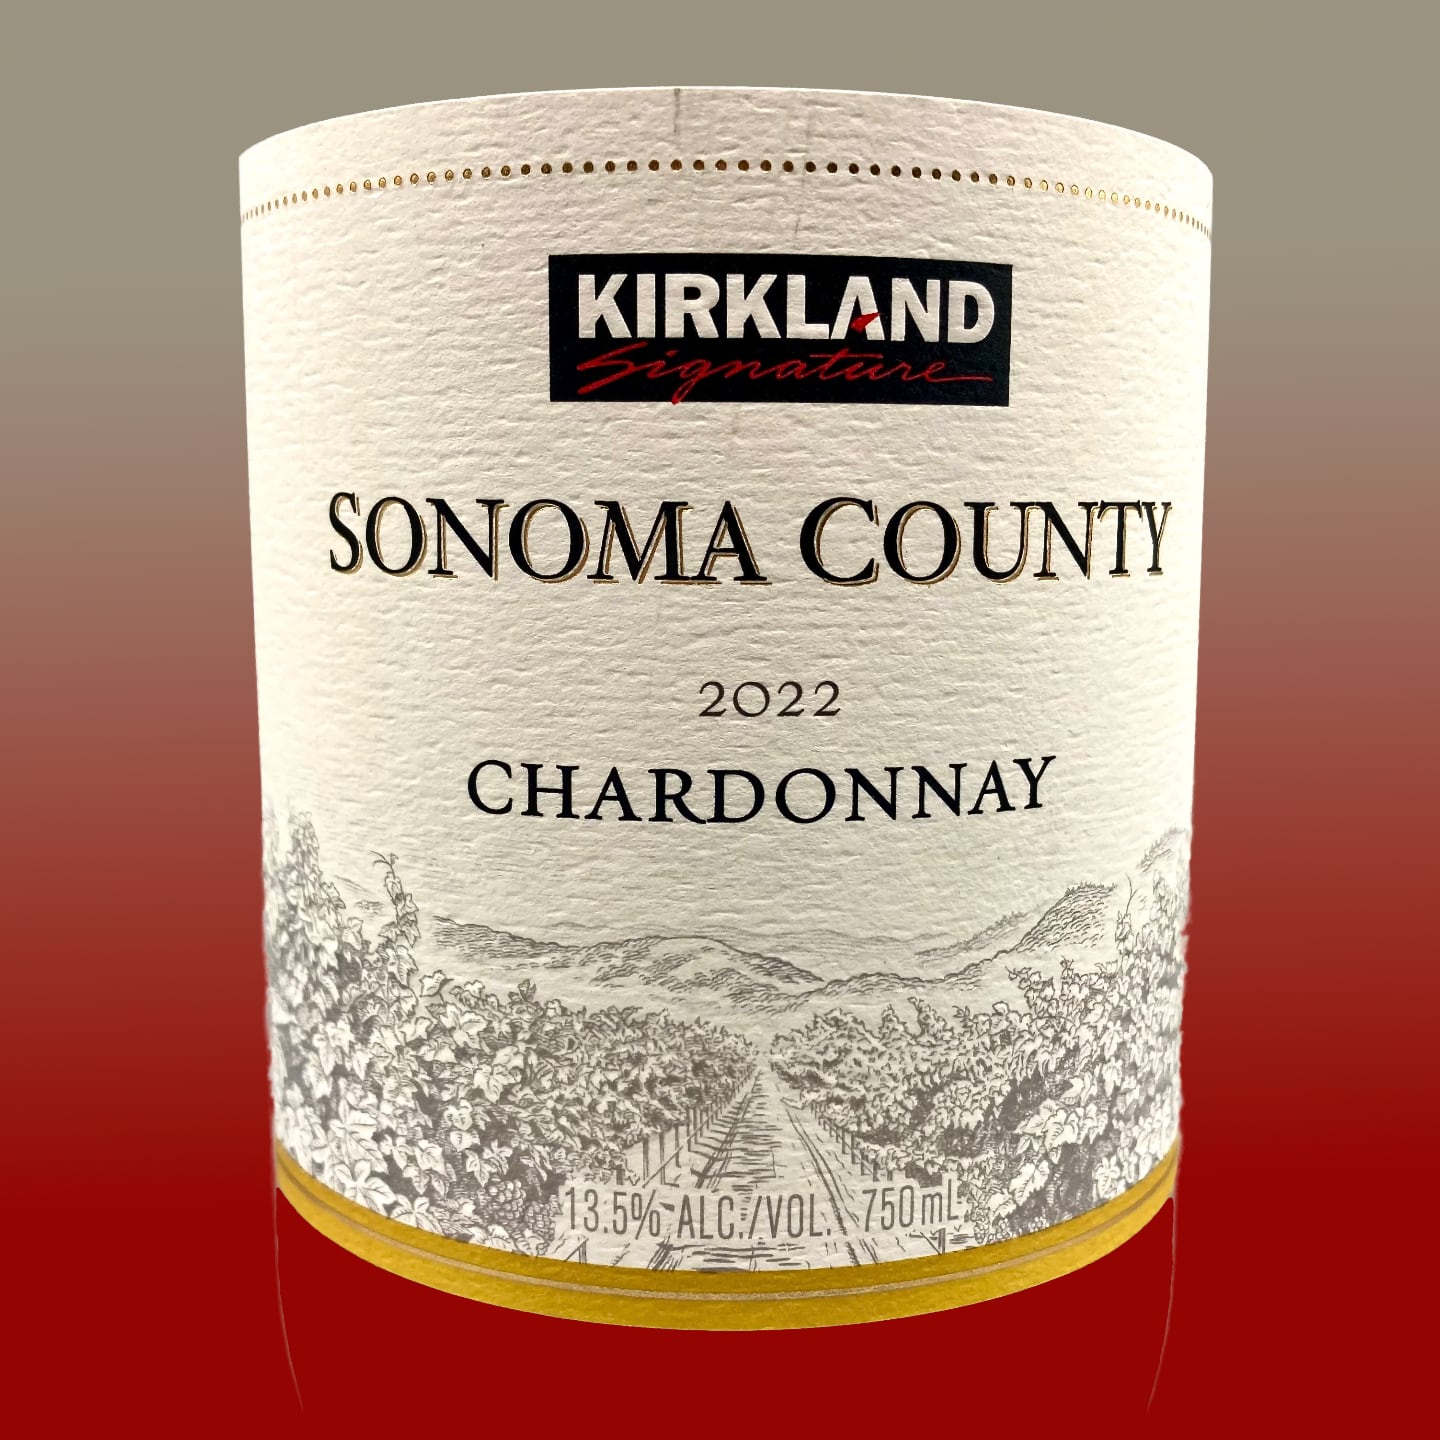 Kirkland Signature Sonoma Couty Chardonnay 2022